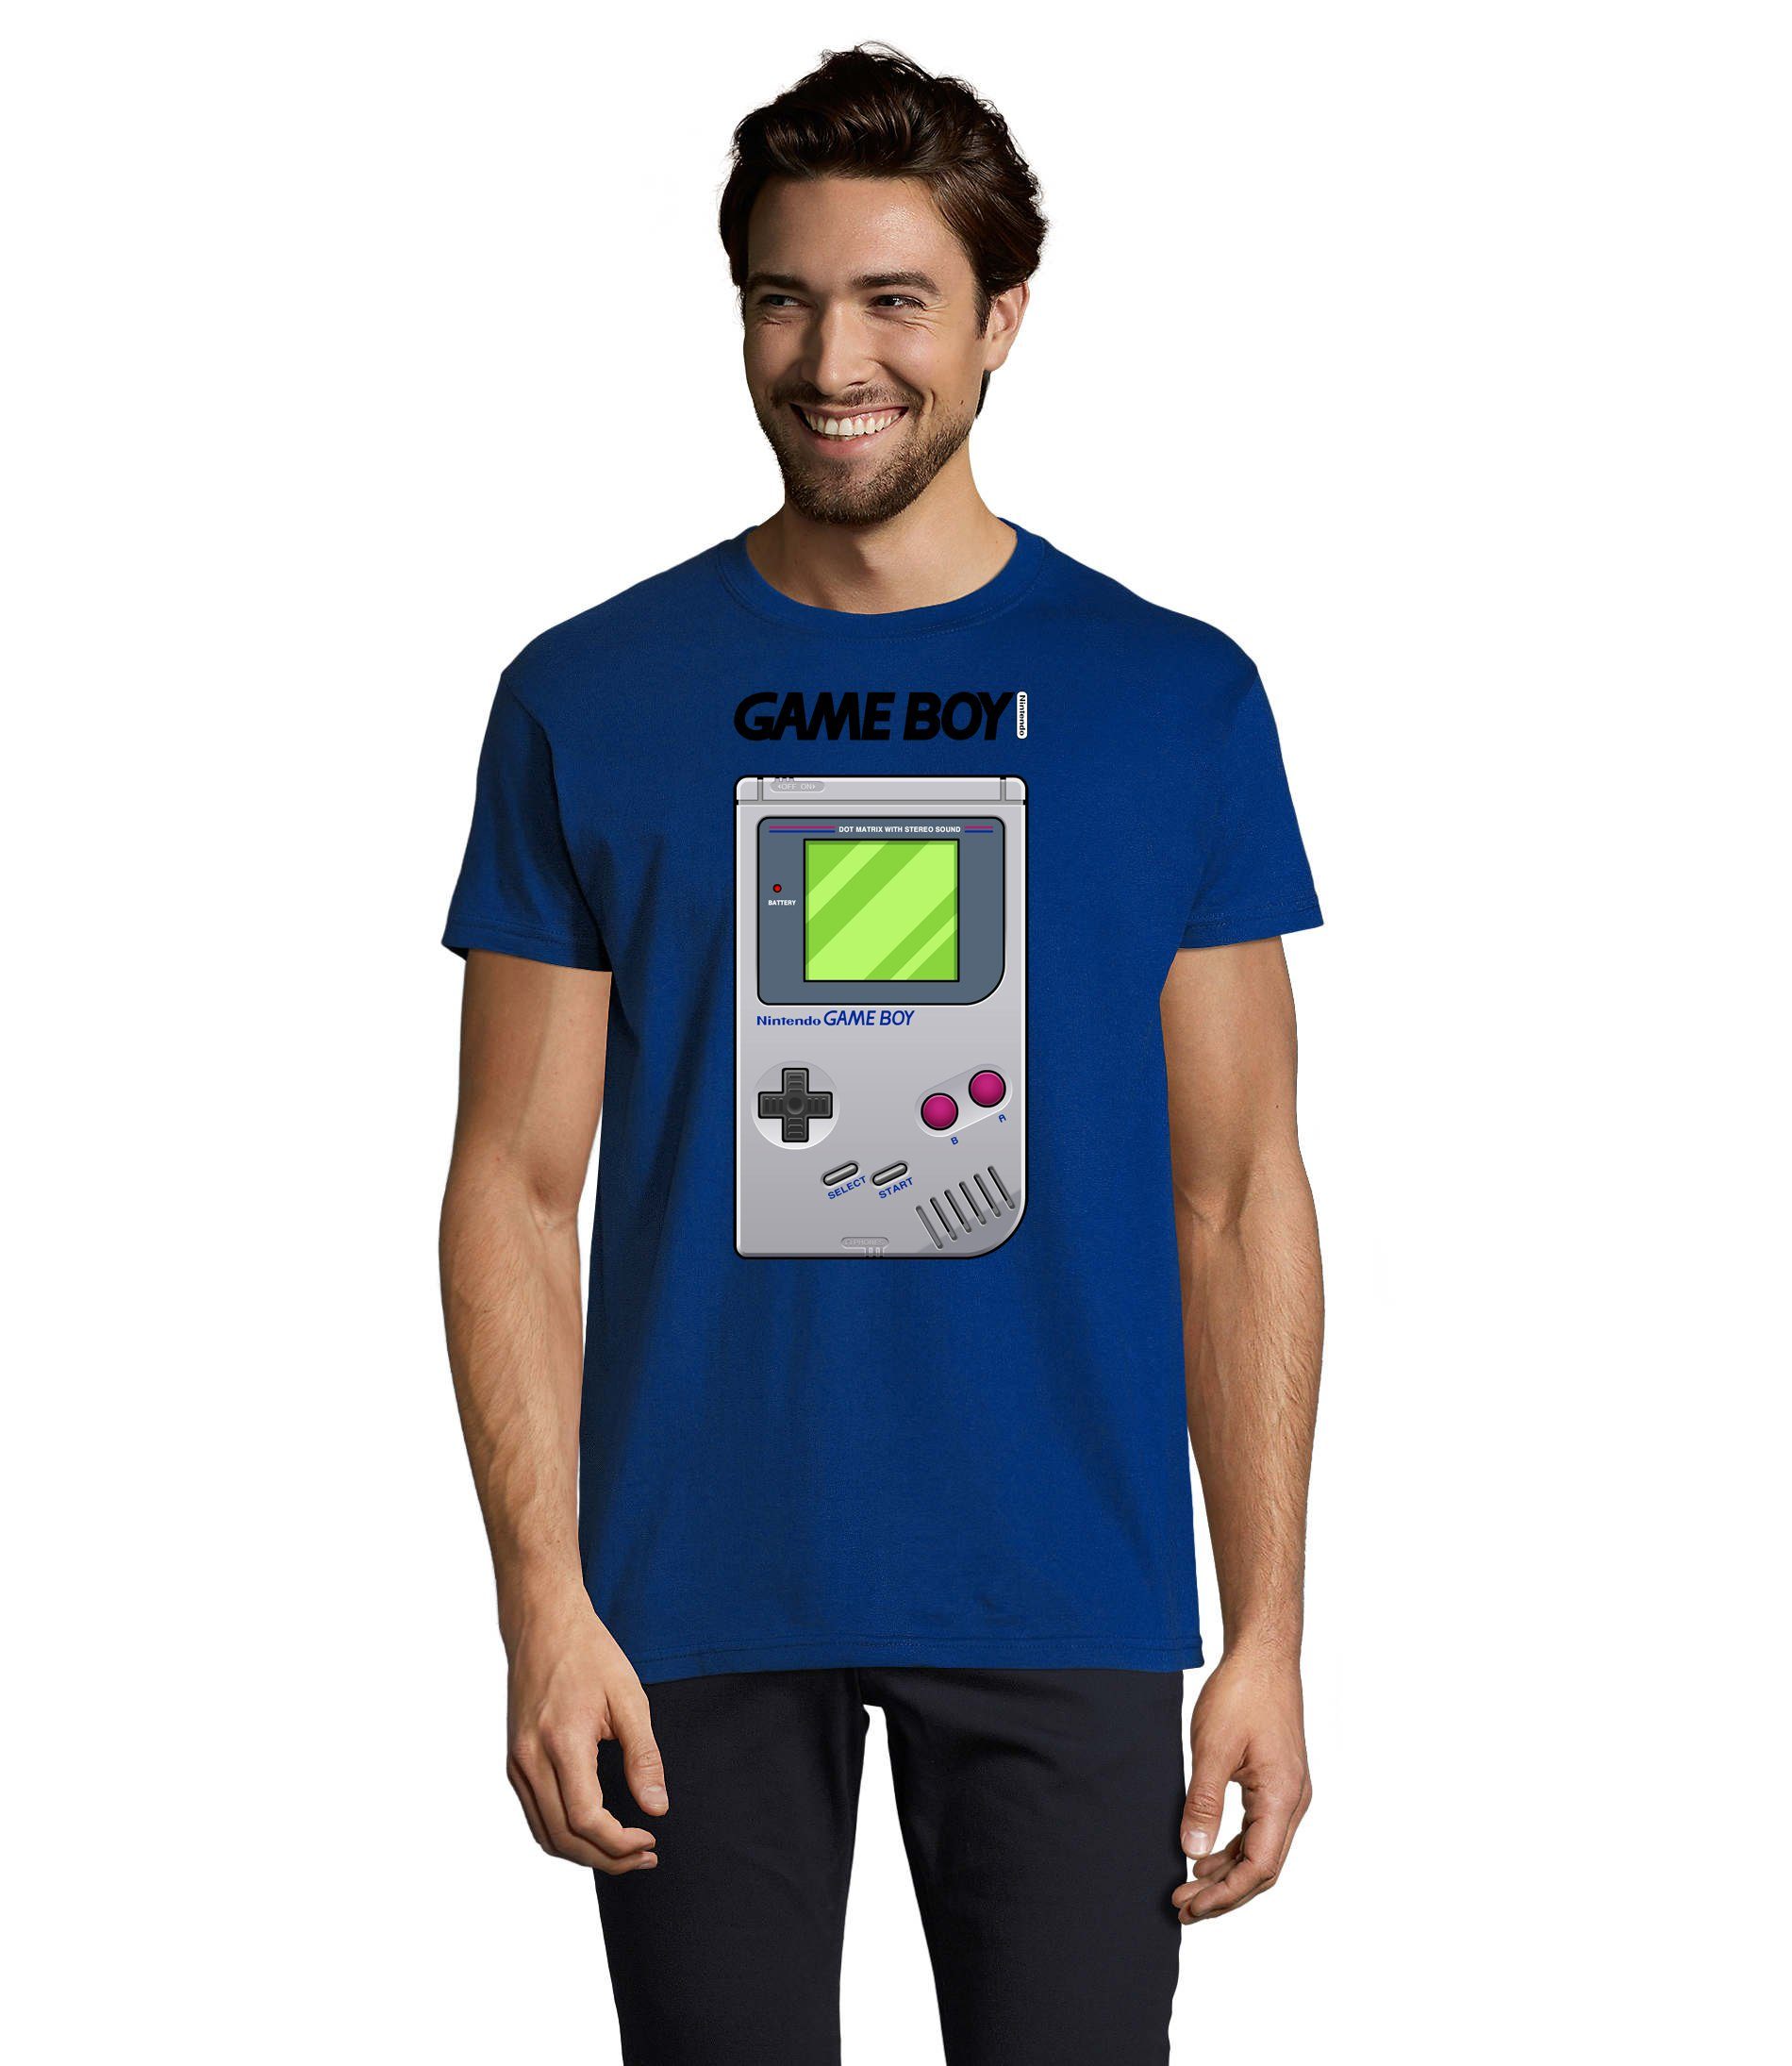 & Boy Brownie Game Retro Herren Gaming Nintendo Konsole T-Shirt Blondie Blau Gamer